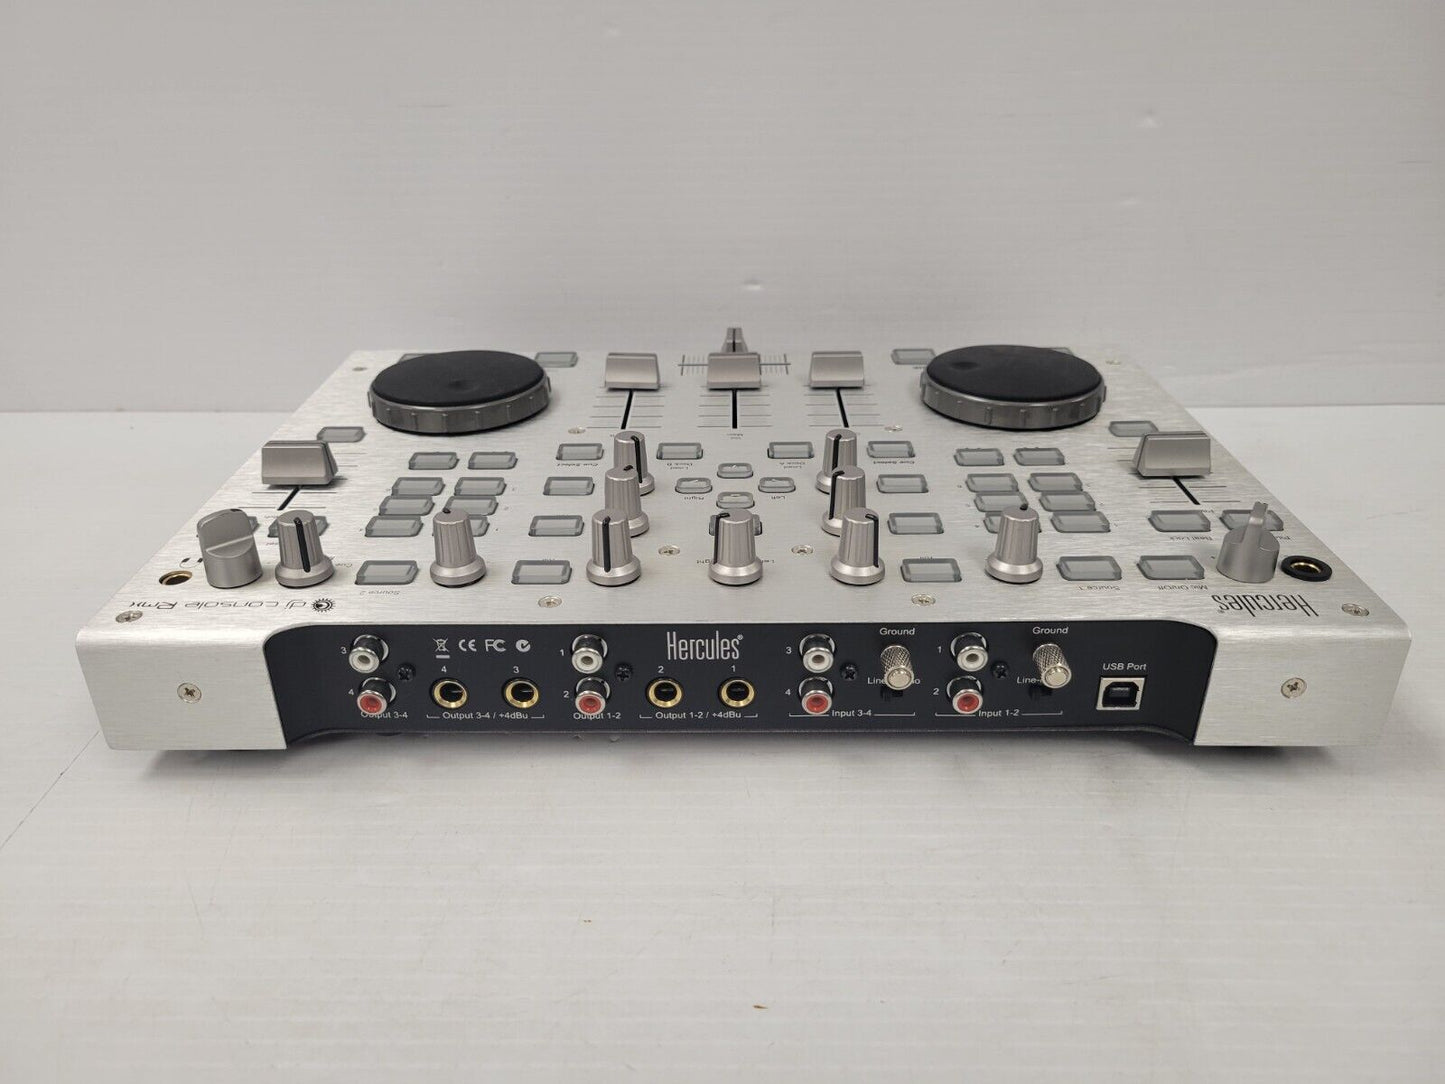 (51908-3) Hercules RMX DJ Controller